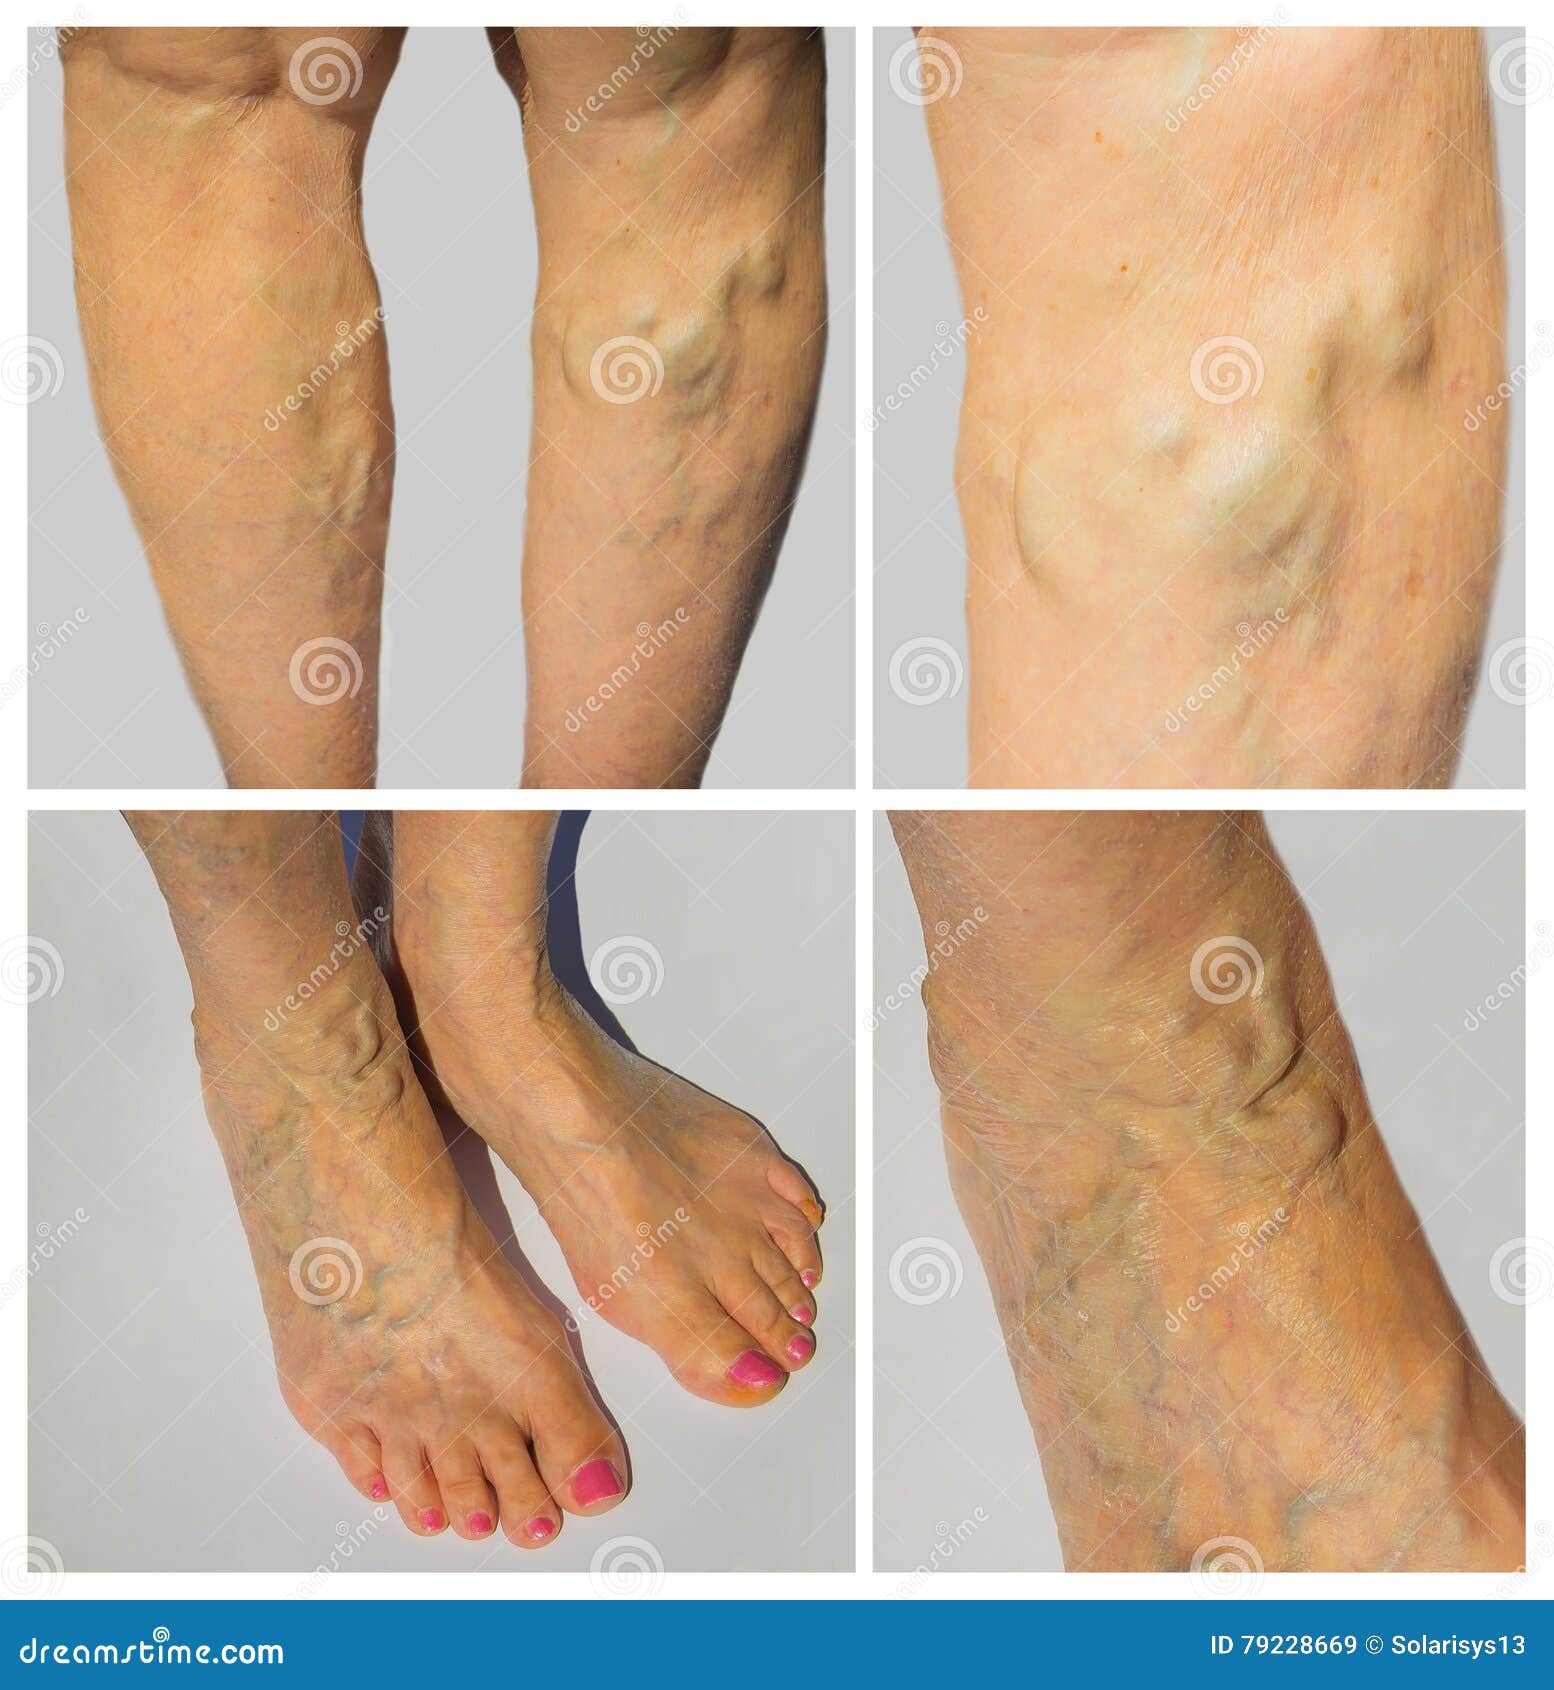 https://thumbs.dreamstime.com/z/varicose-veins-female-legs-old-woman-gray-79228669.jpg